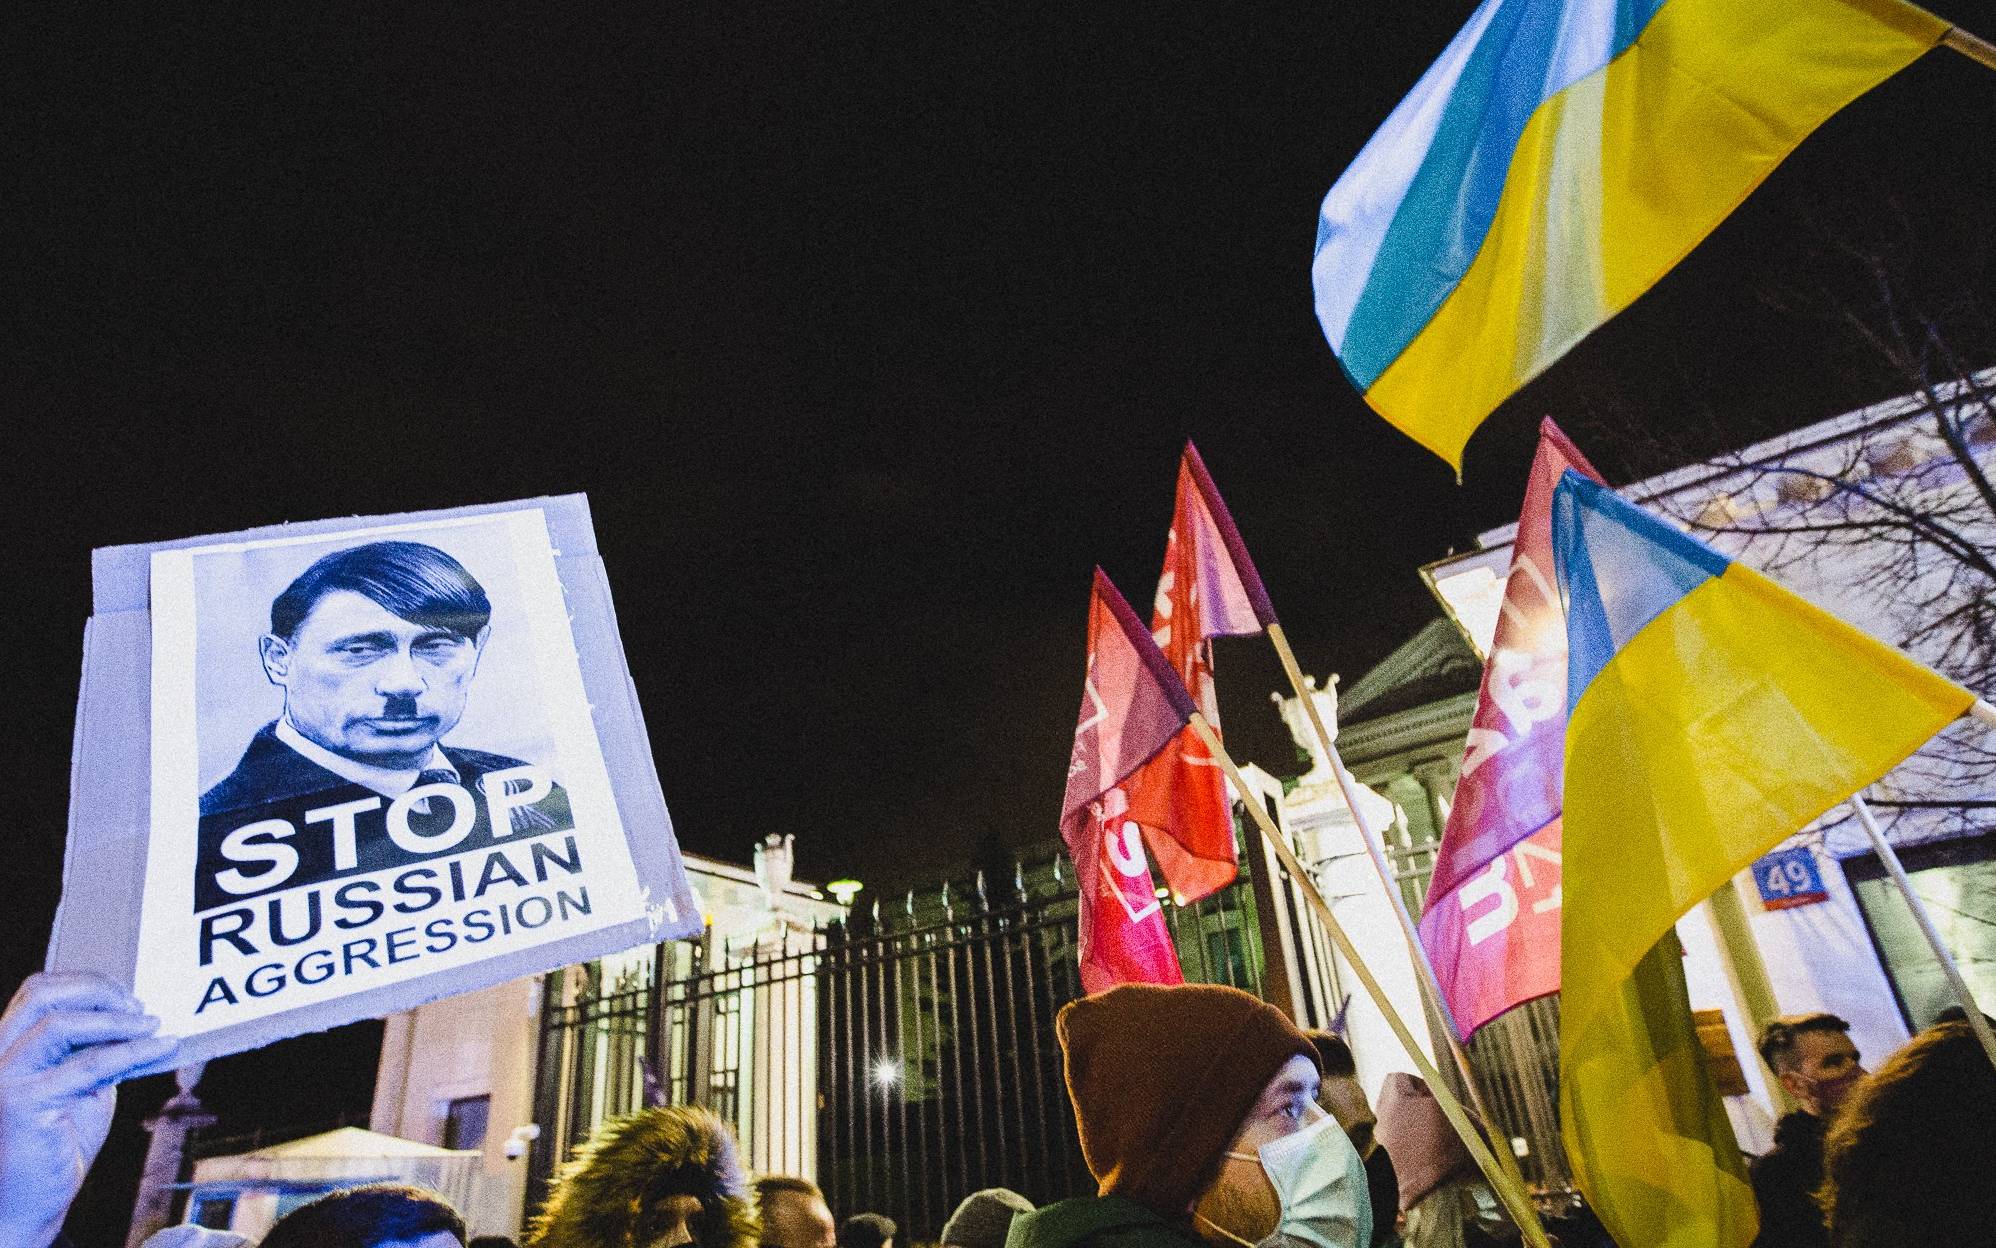 Warszawa, 23.02.2022. „Stop Puitin wars, stand with Ukraine”. Protest pod ambasadą Rosji